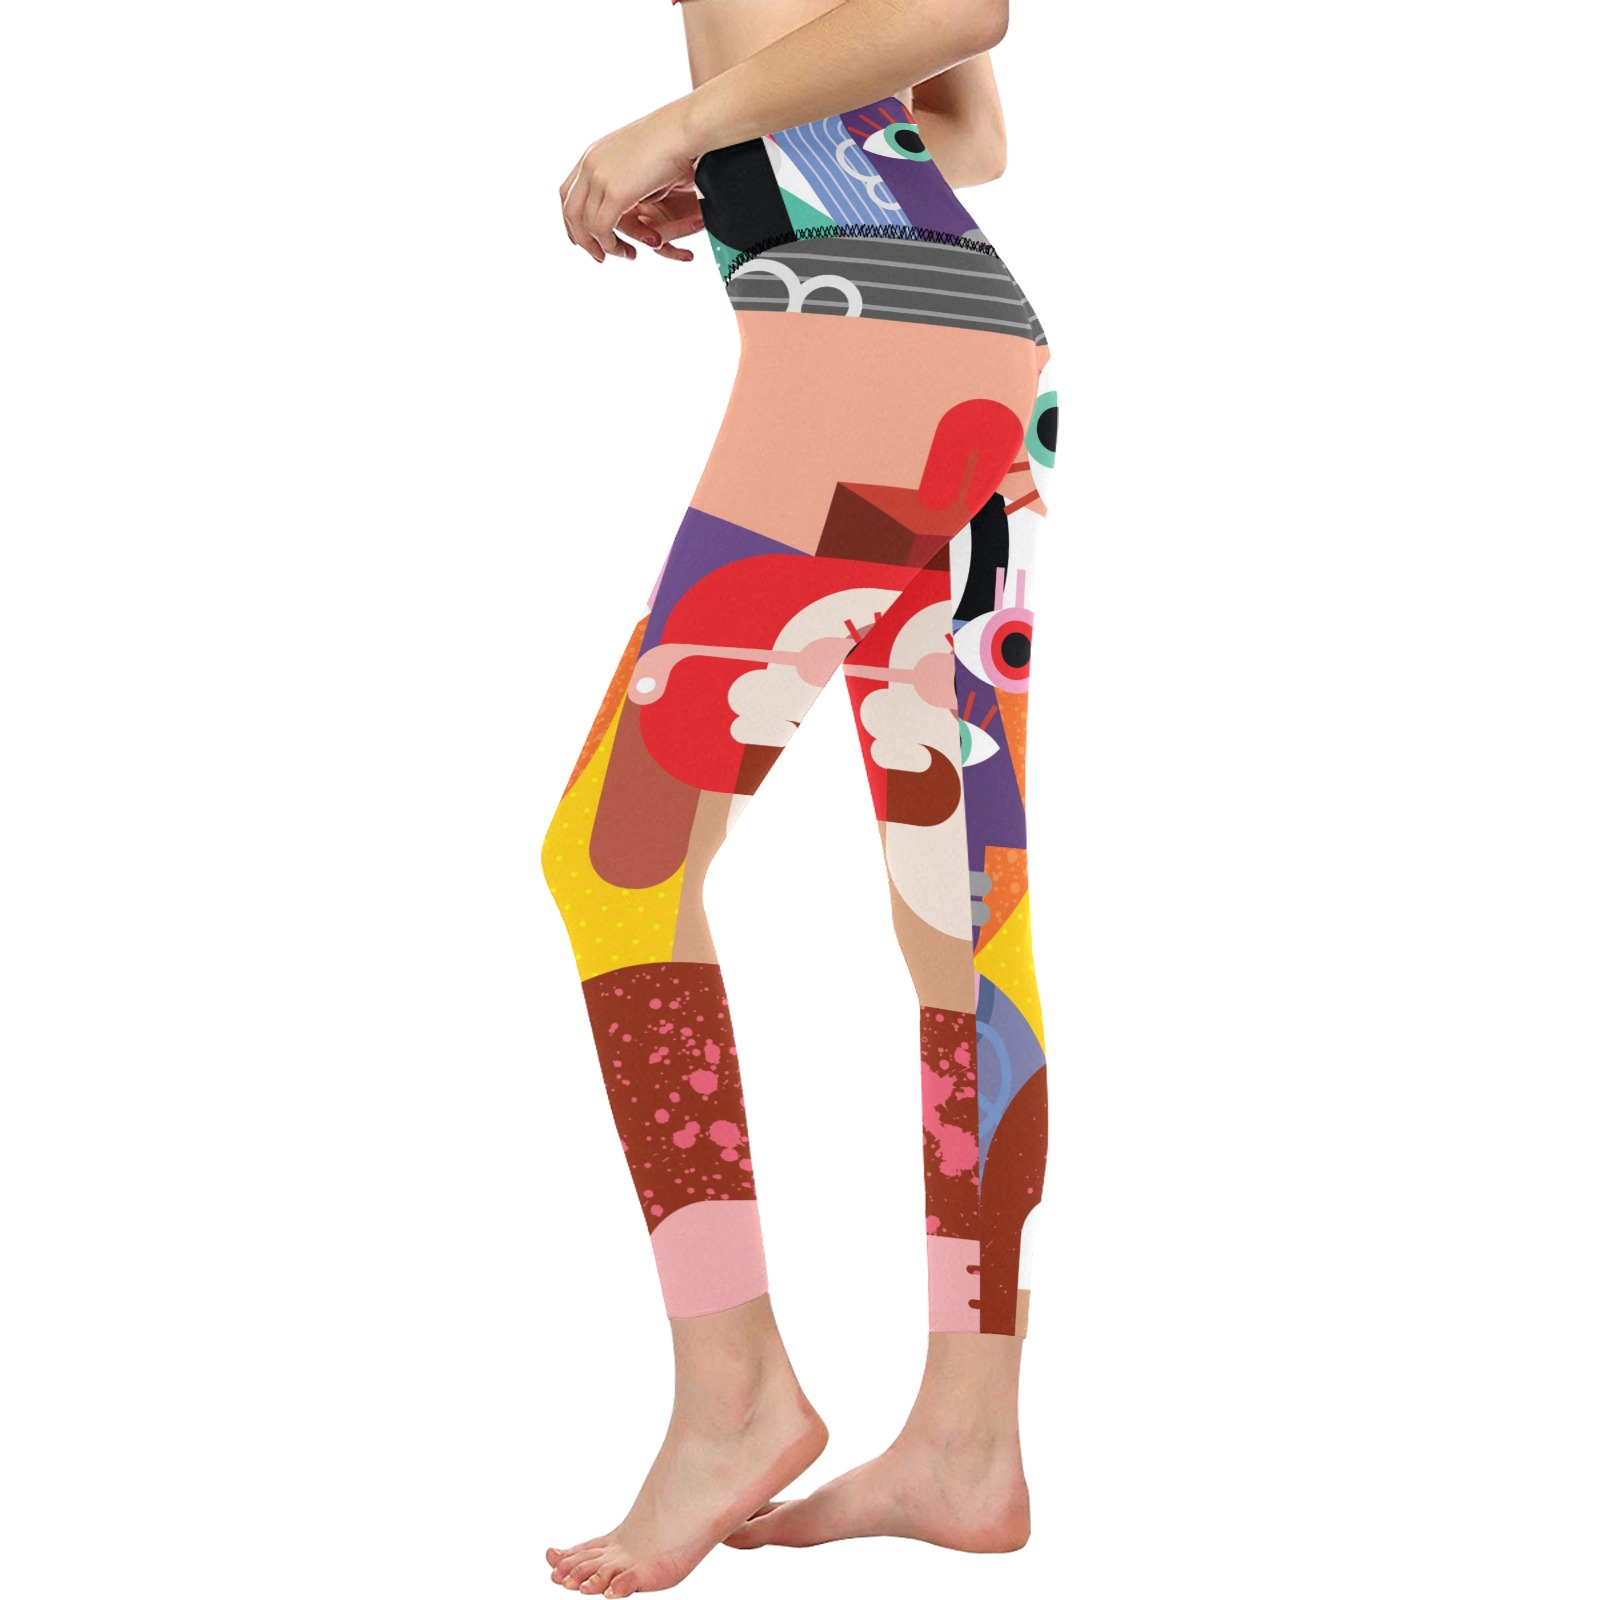 Custom Print on Demand Leggings  FITOP - Design Your Own Leggings